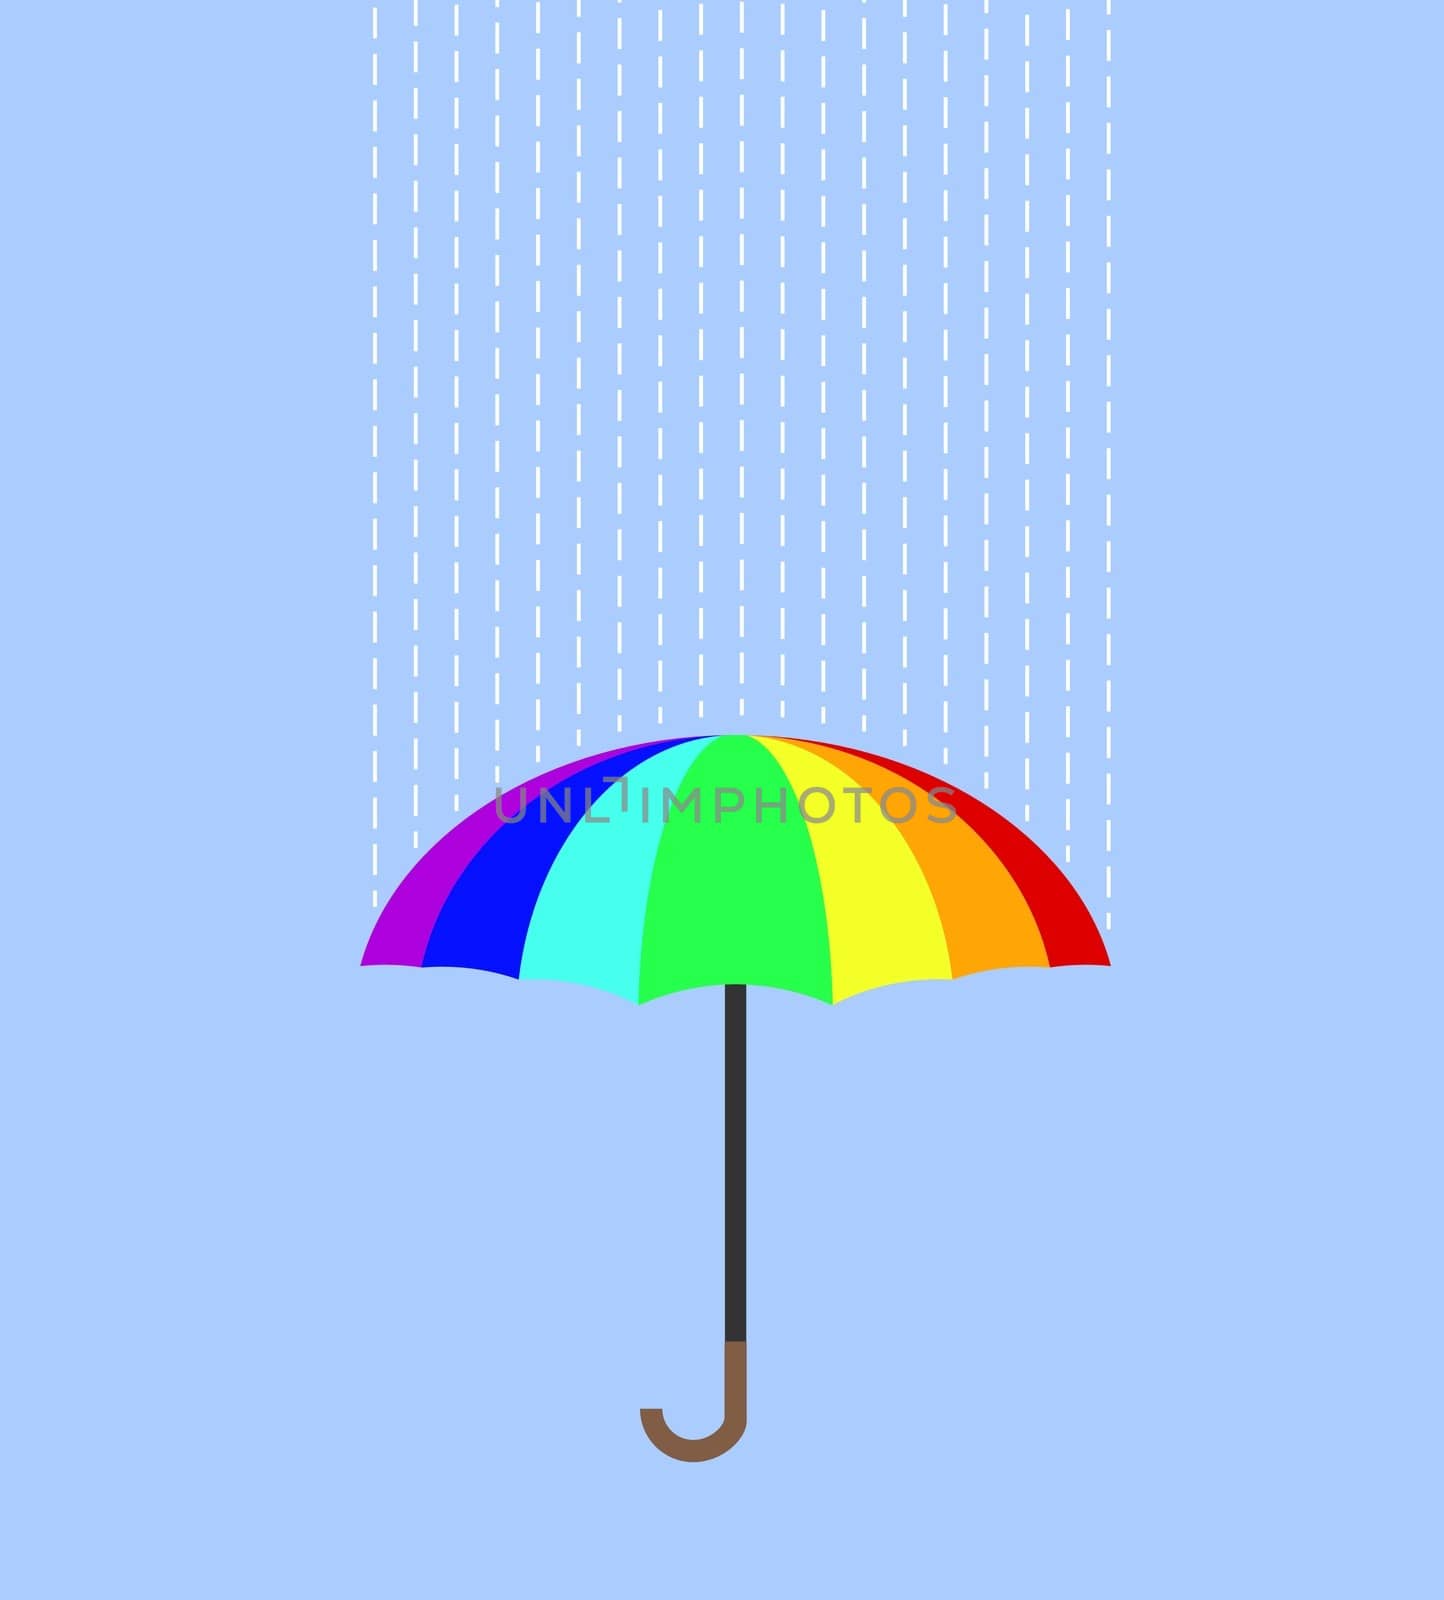 Illustration of a colorful umbrella with white line rain